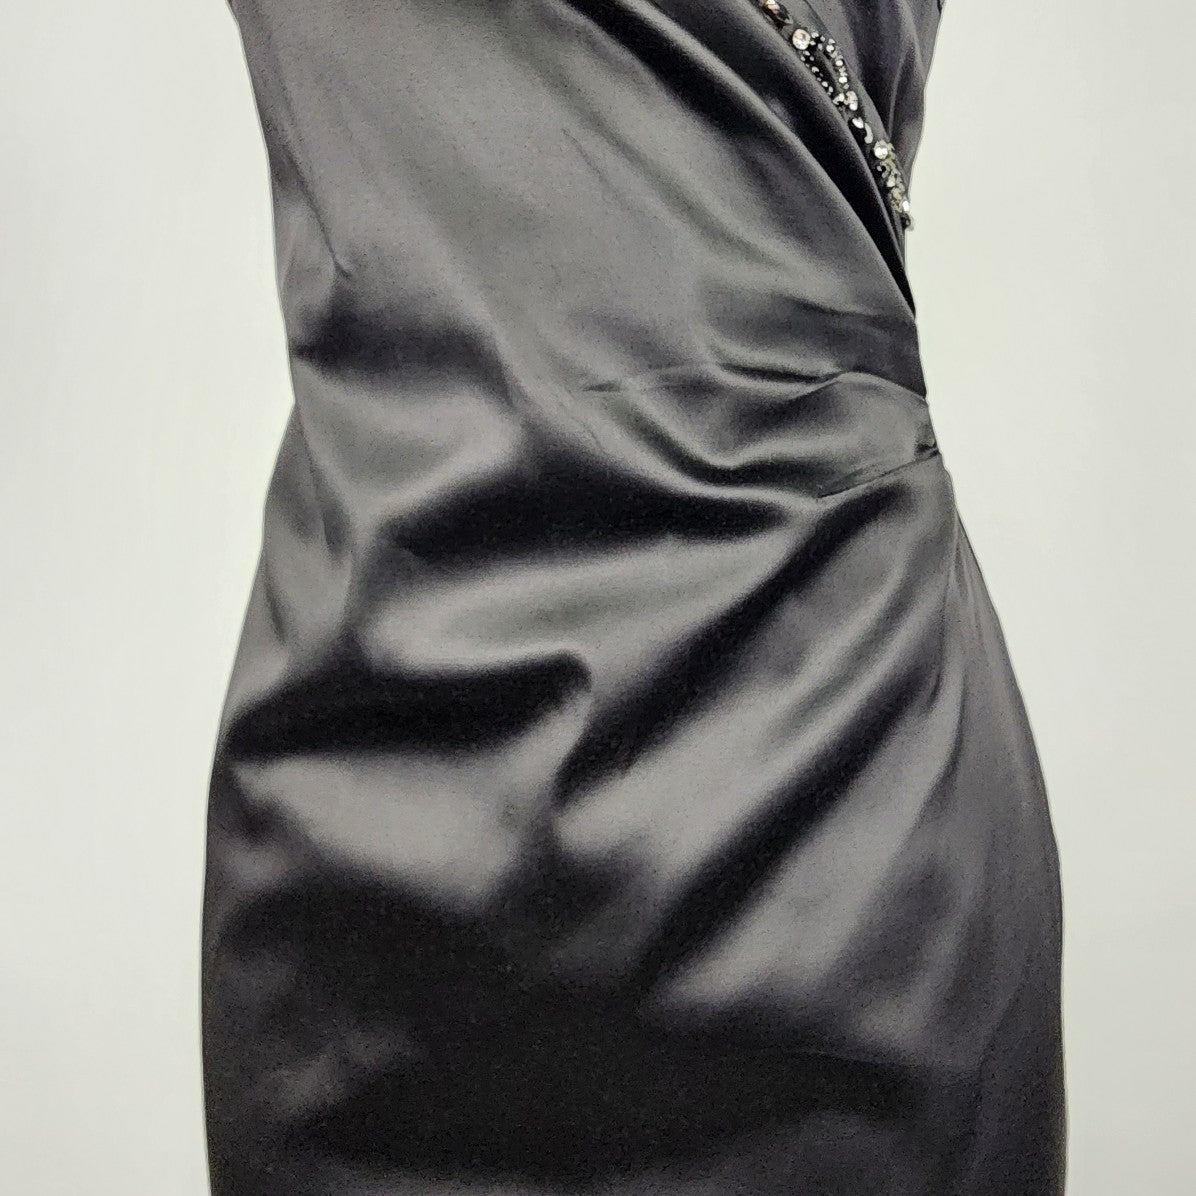 In Wear Black Satin Rhinestone Detail V-Neck Evening Dress Size 6